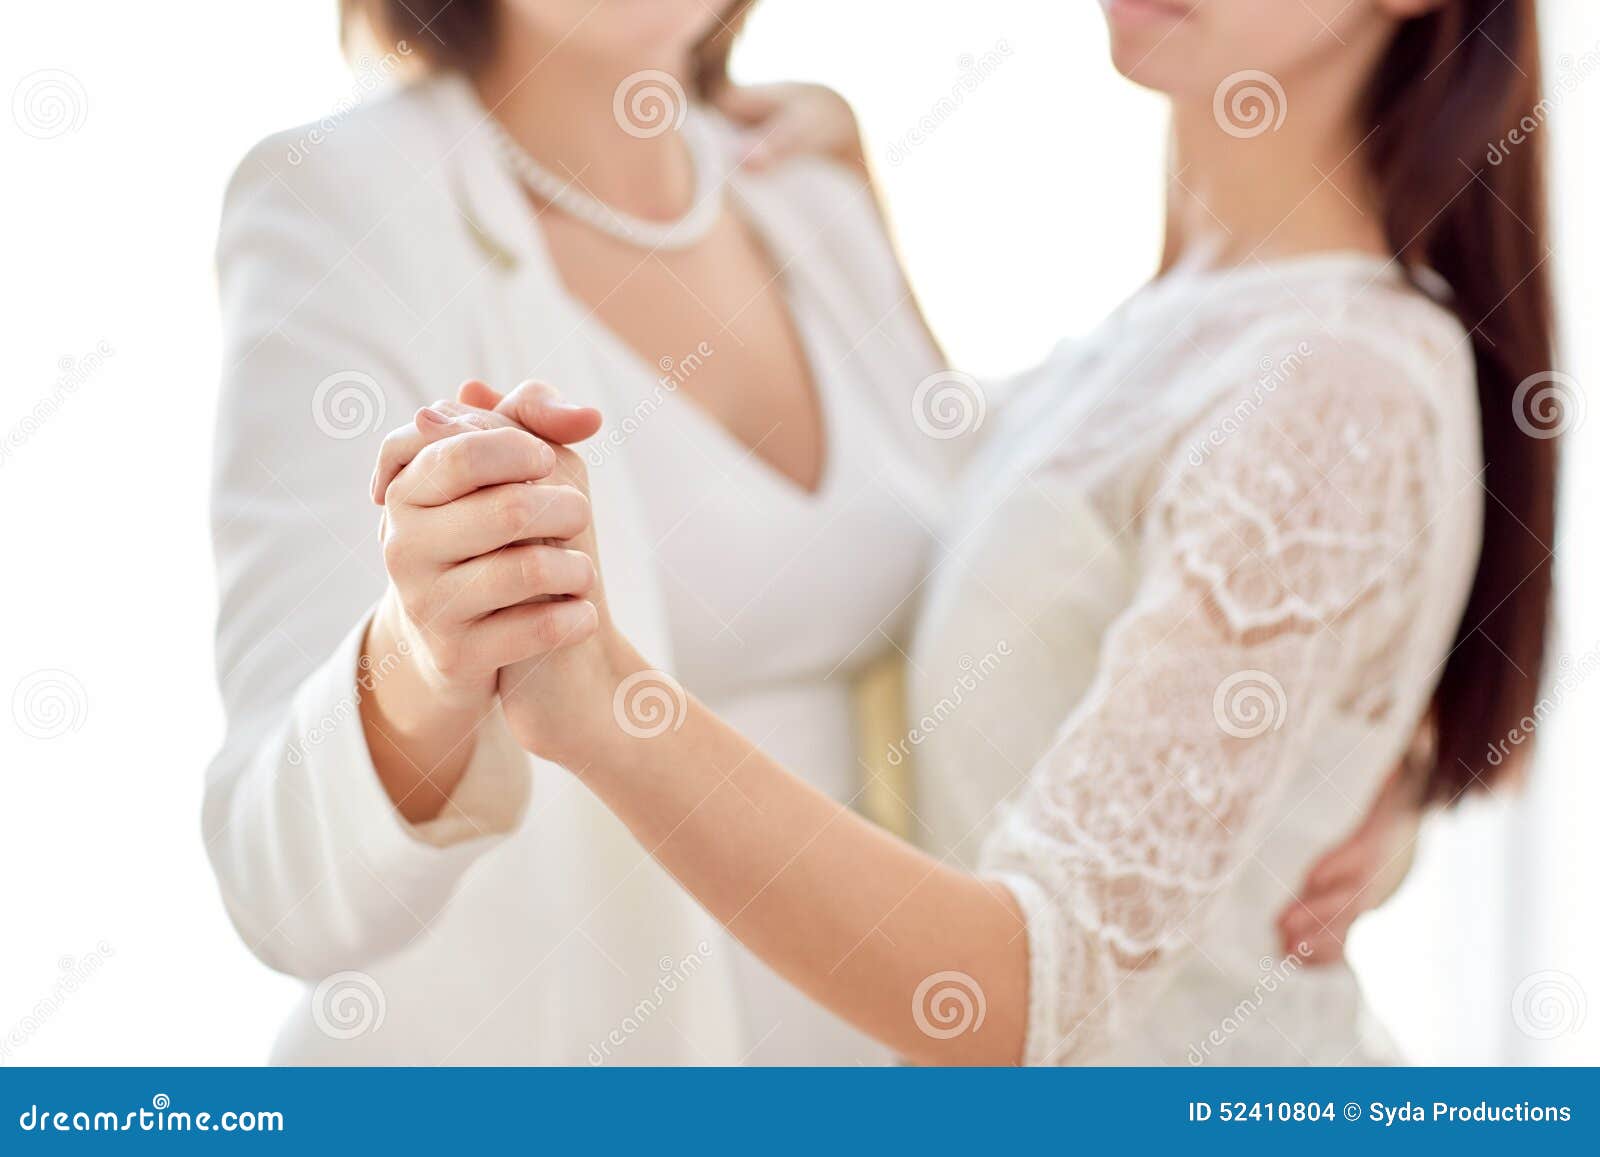 427 Married Women Lesbian Wedding Stock Photos pic